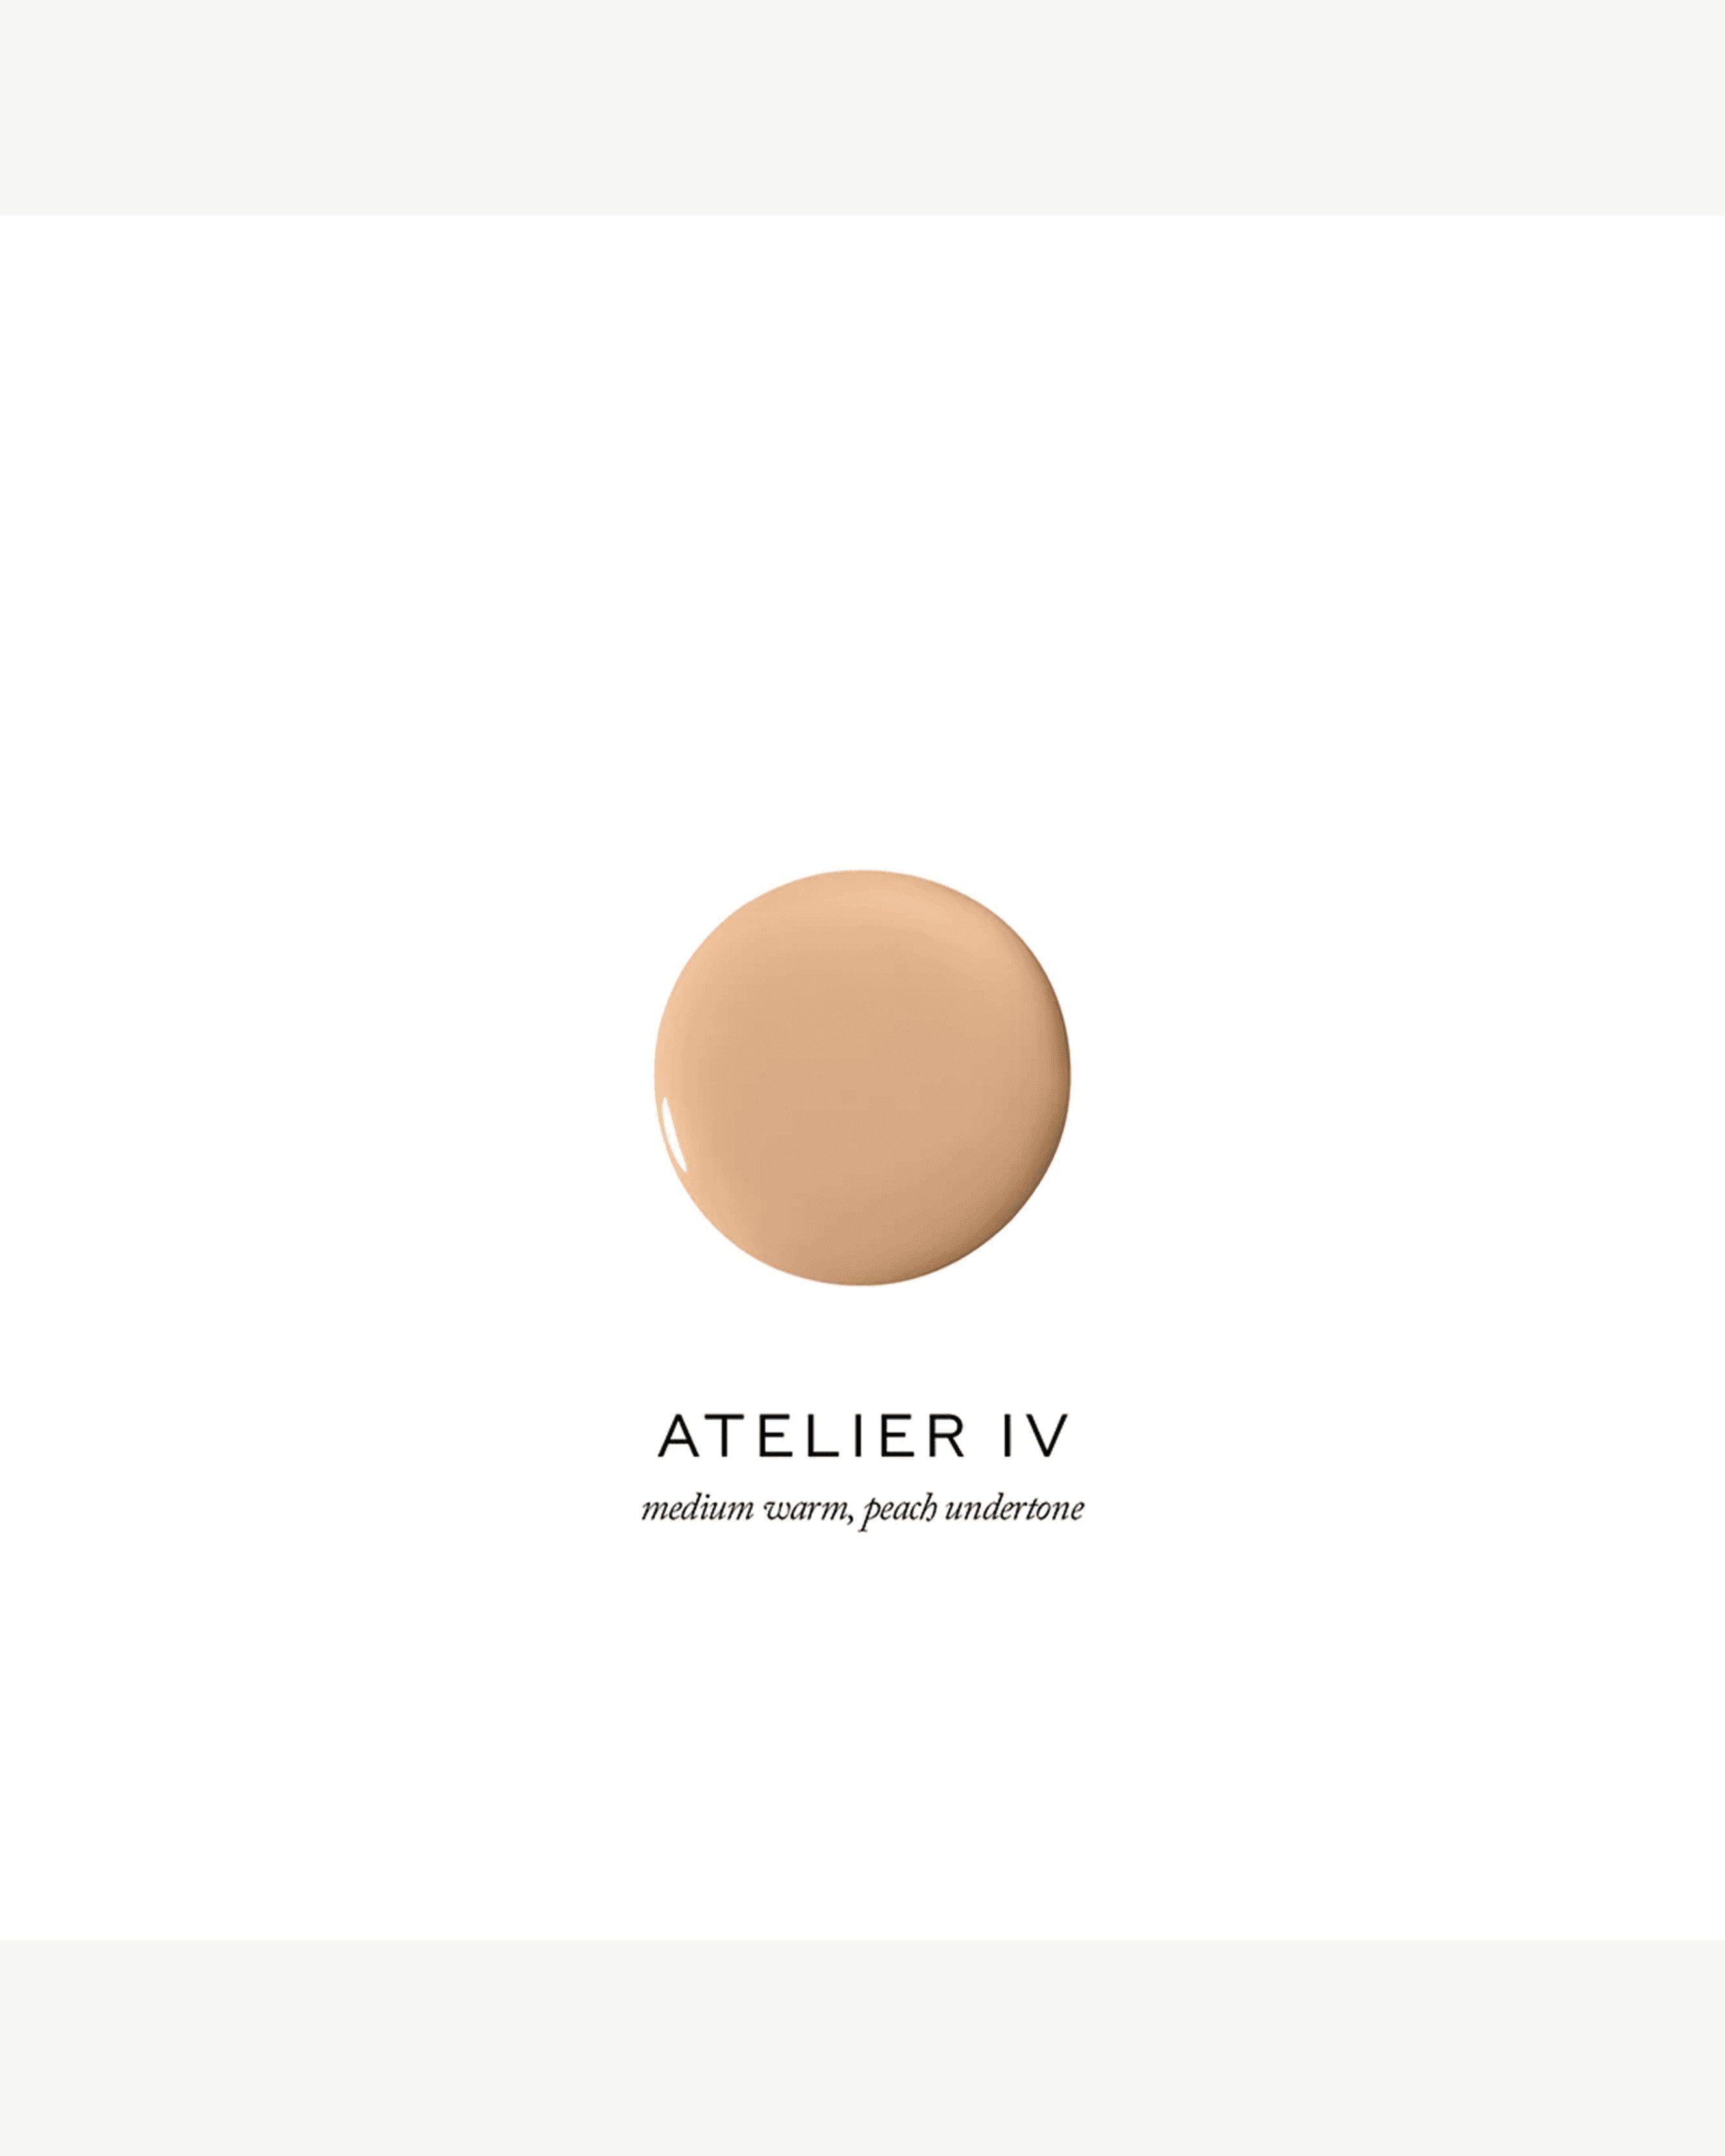 Atelier IV (medium warm, peach undertone)